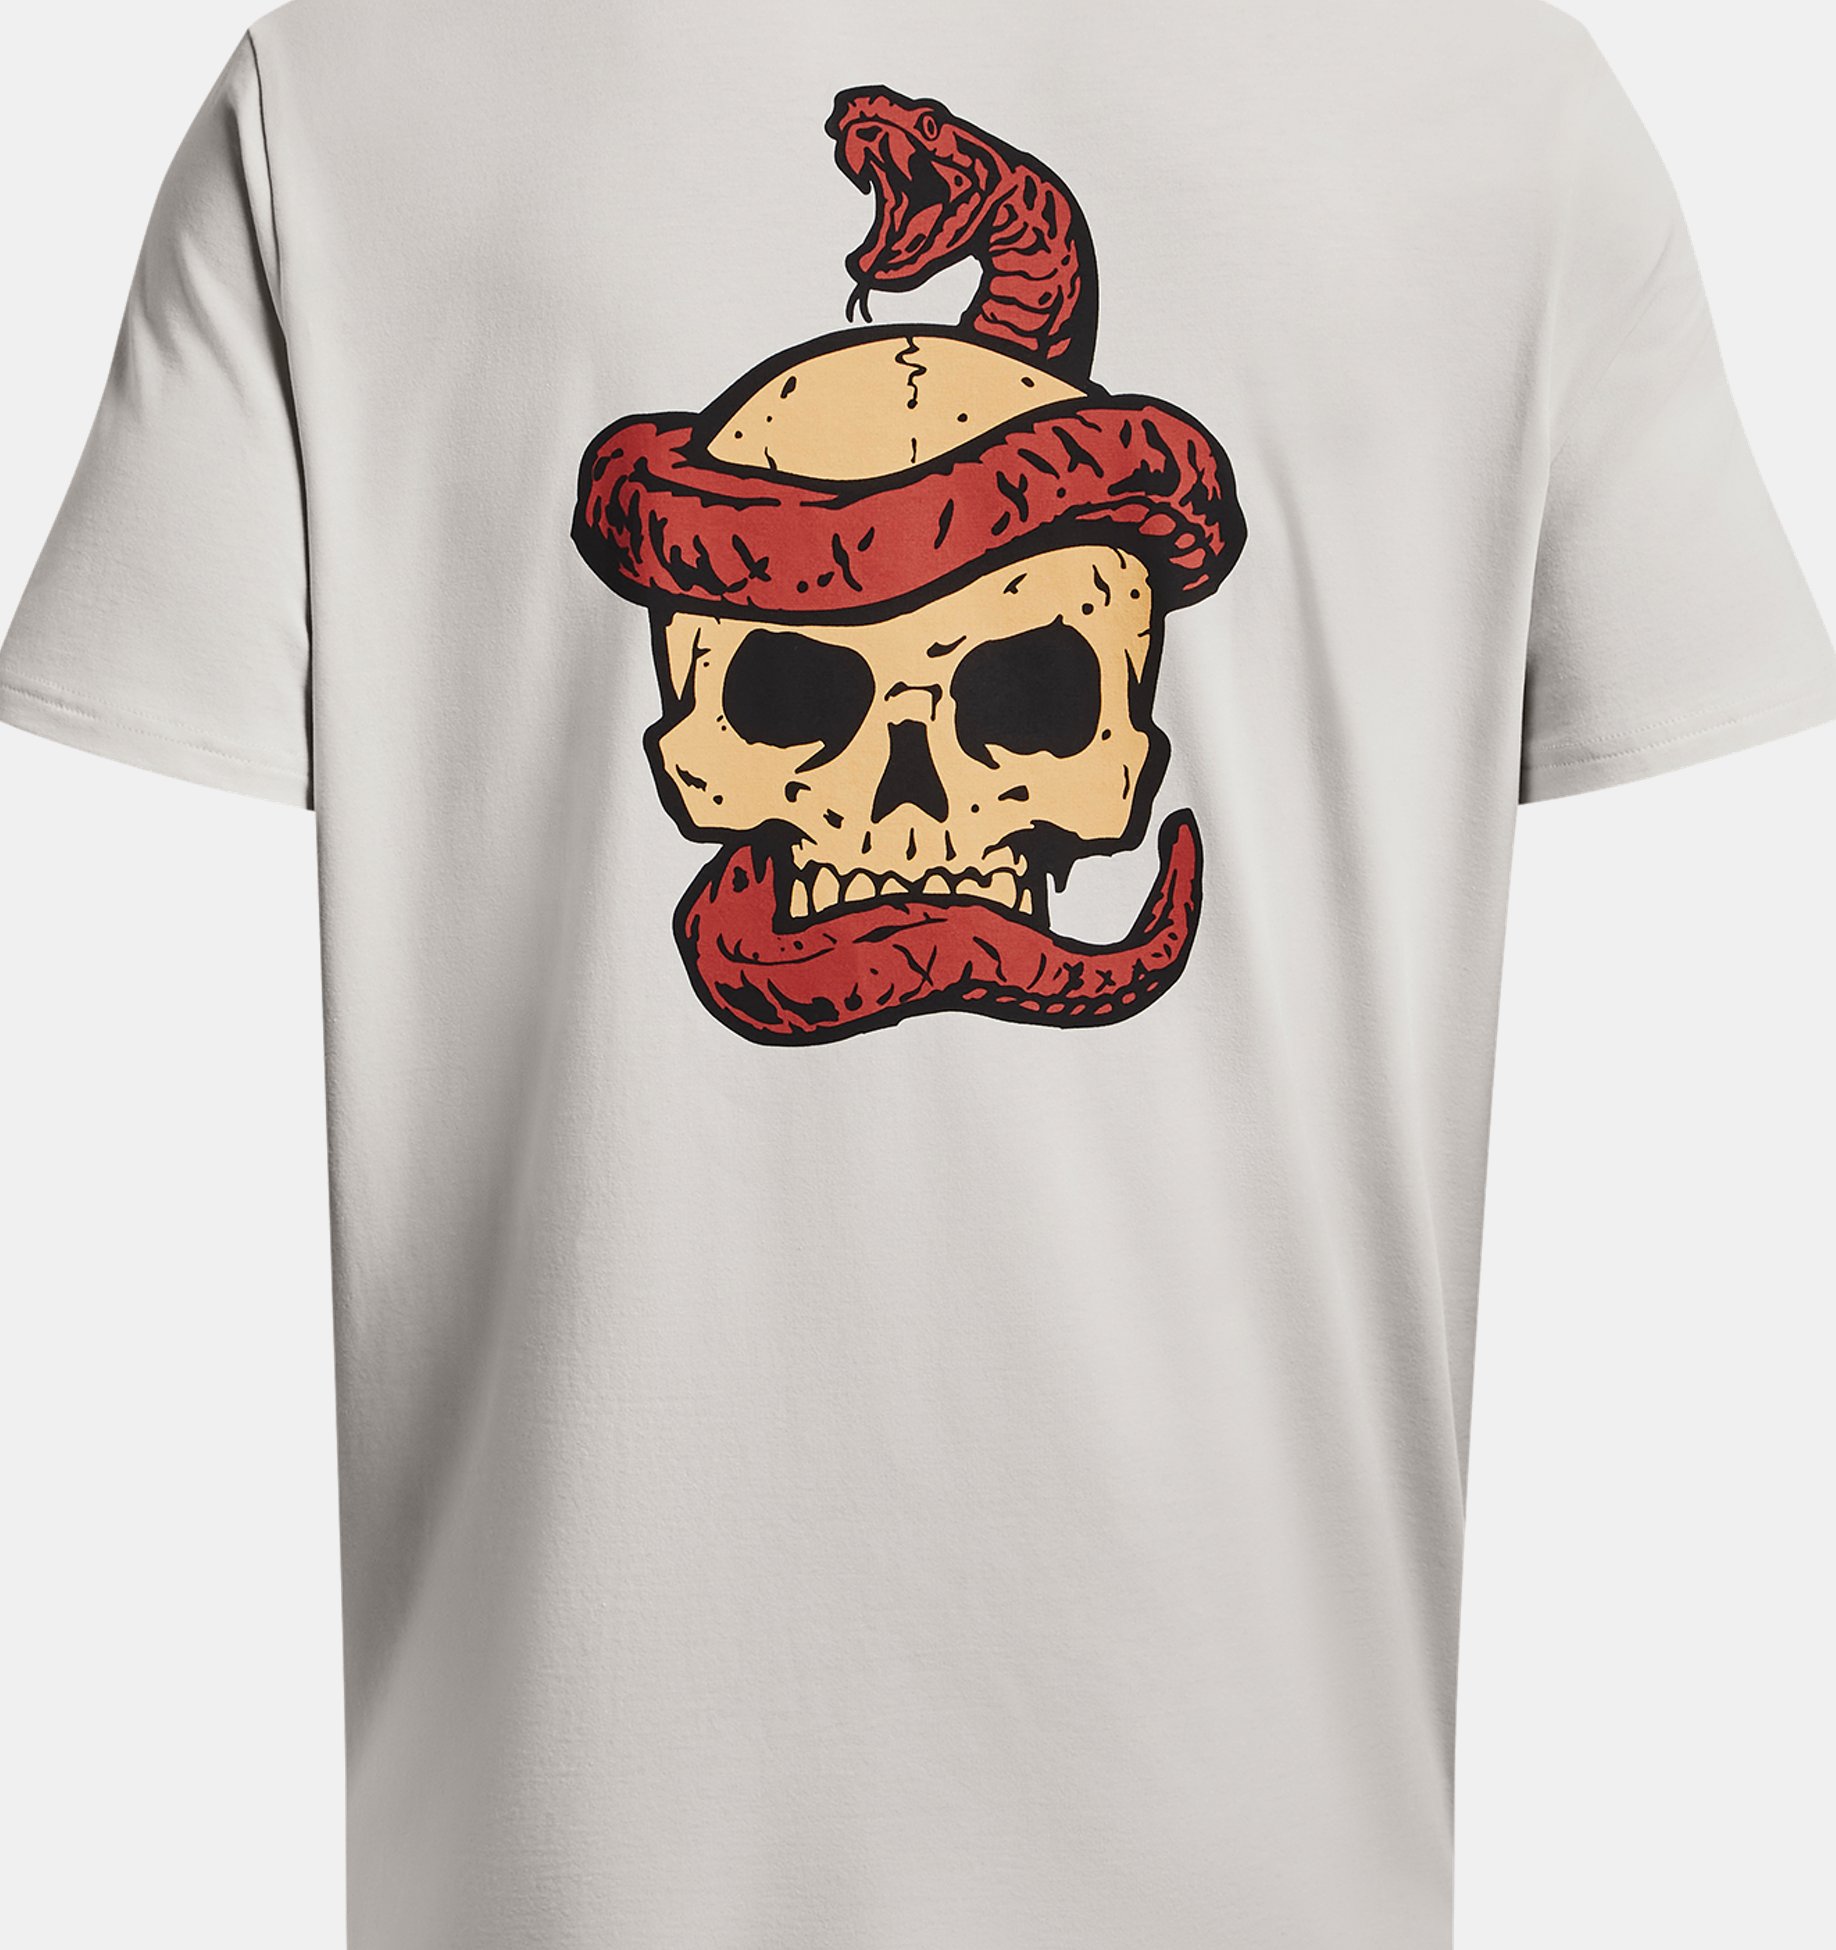 EXCLUSIVE HDLM Cobra Man Shirts! Custom Ink Fundraising